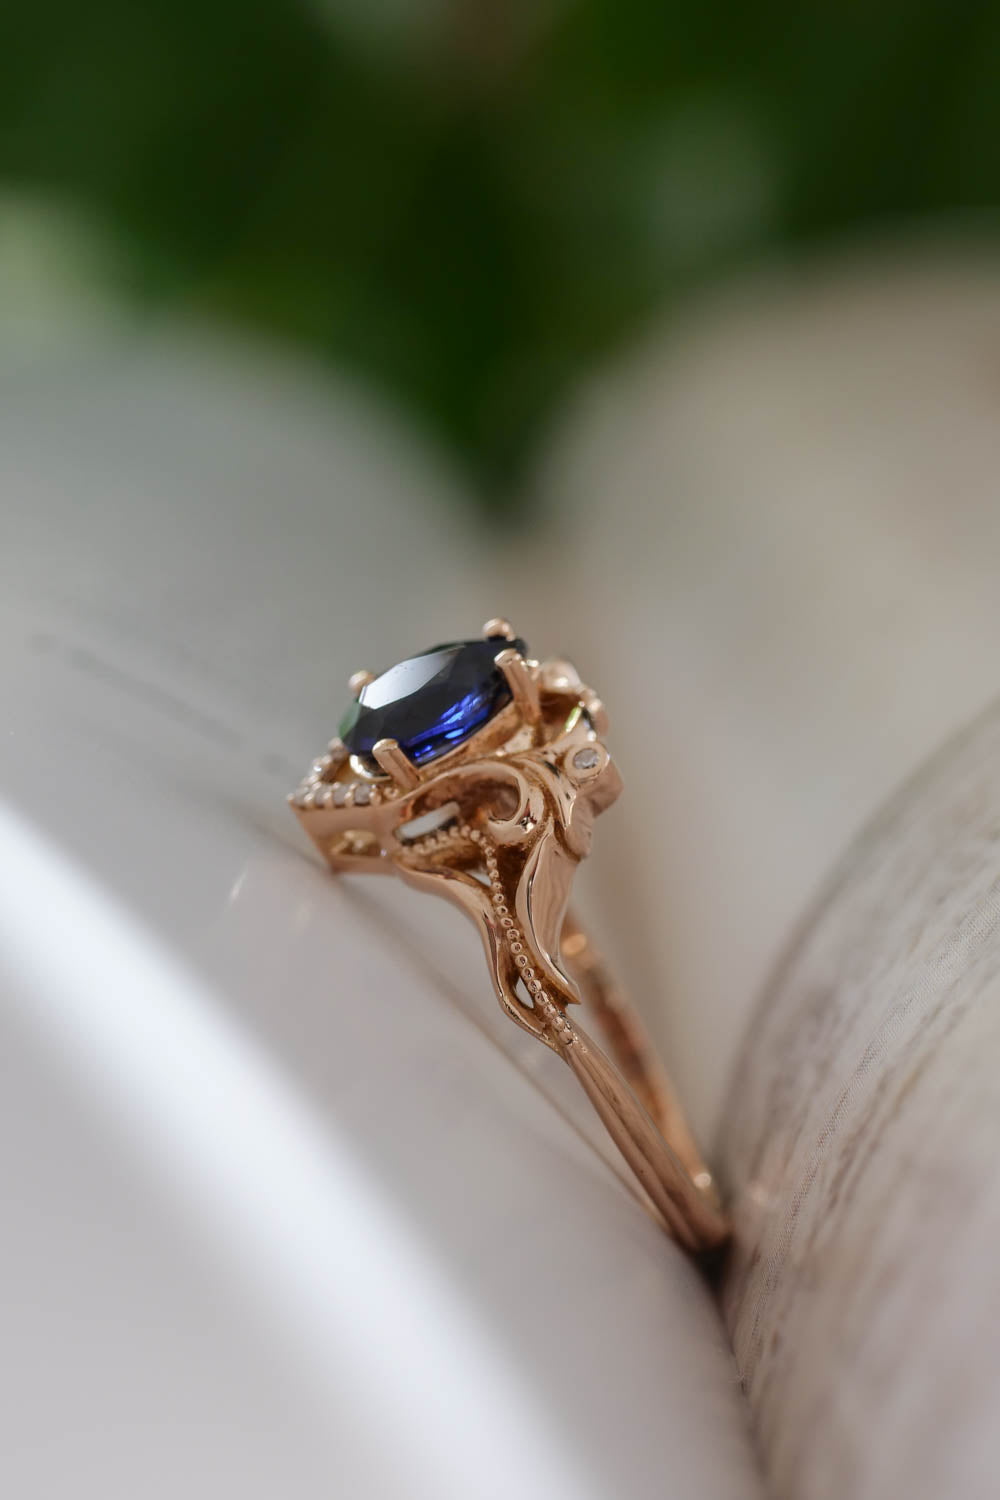 Art nouveau bridal ring set with lab sapphire / Lida - Eden Garden Jewelry™